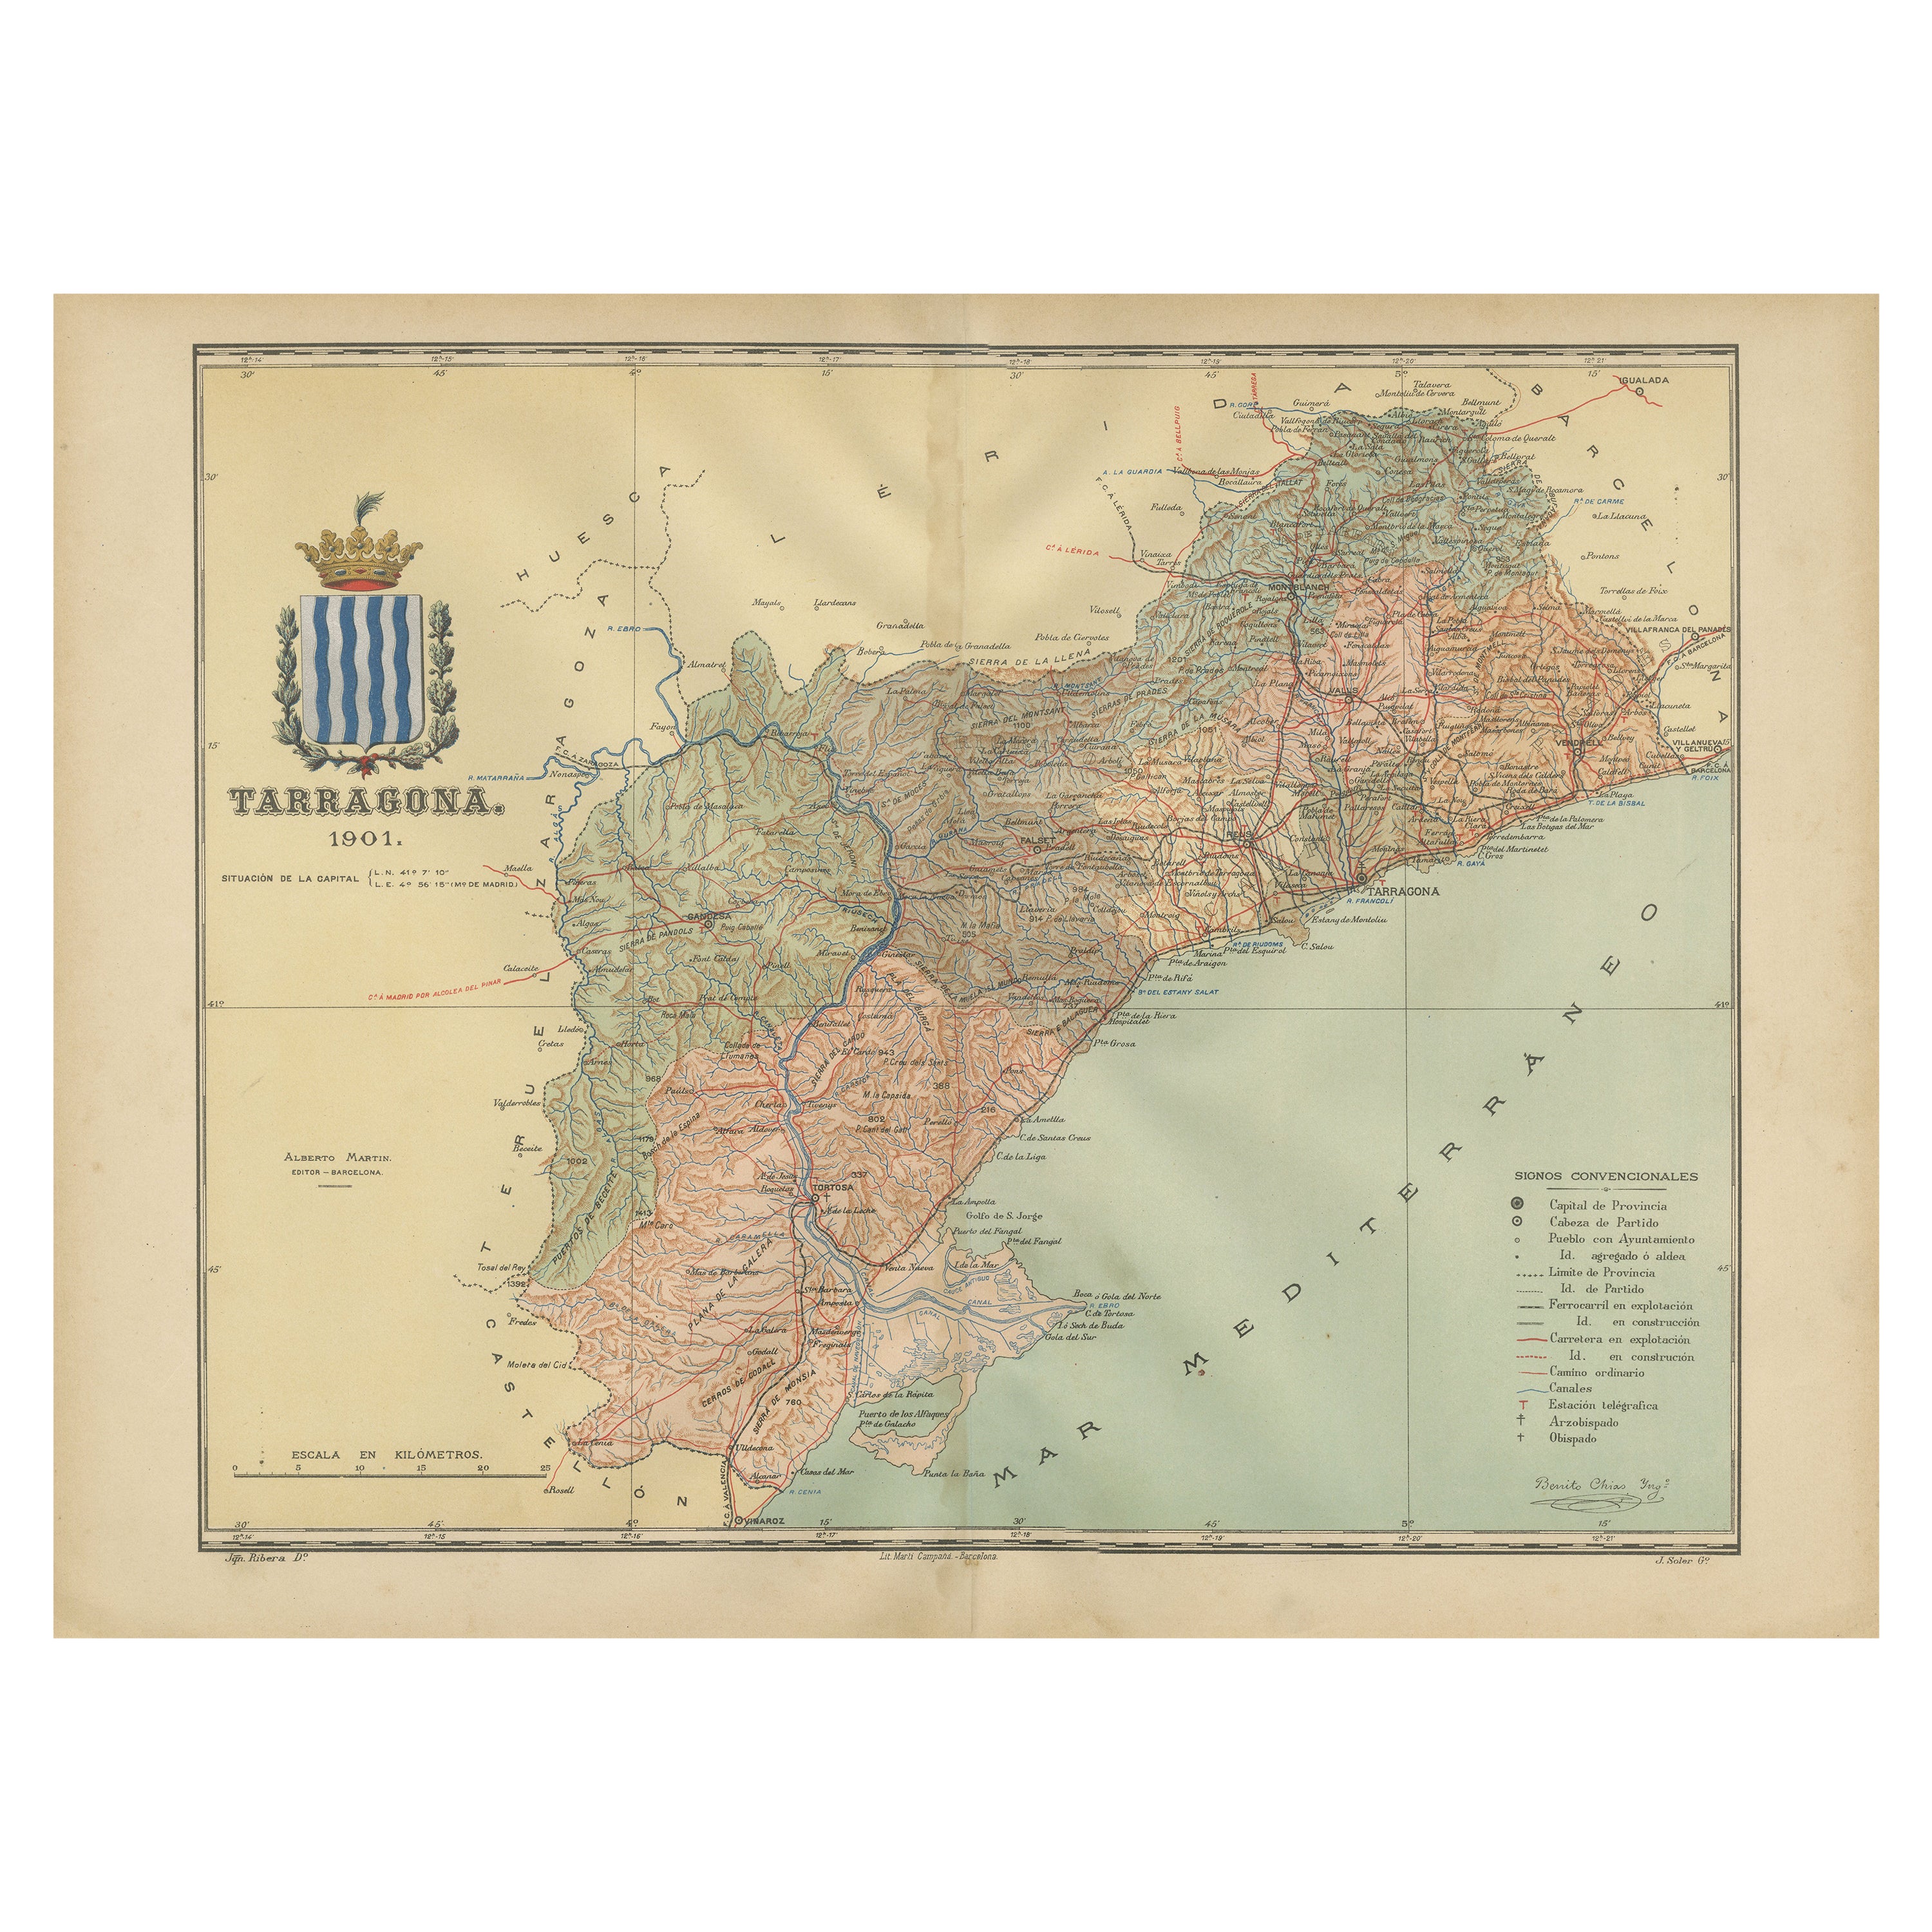 A Catalonian Cartographic Depiction of Tarragona Province, 1901